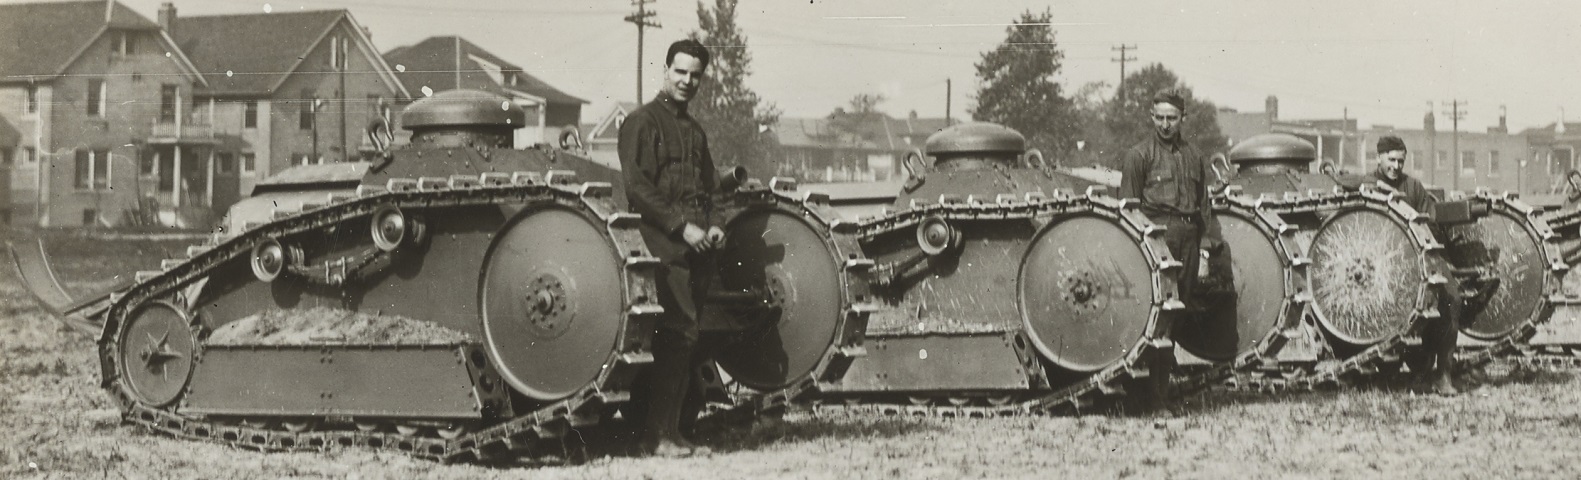 America's First Tank - Ford M1918 Light Tank 5.jpg